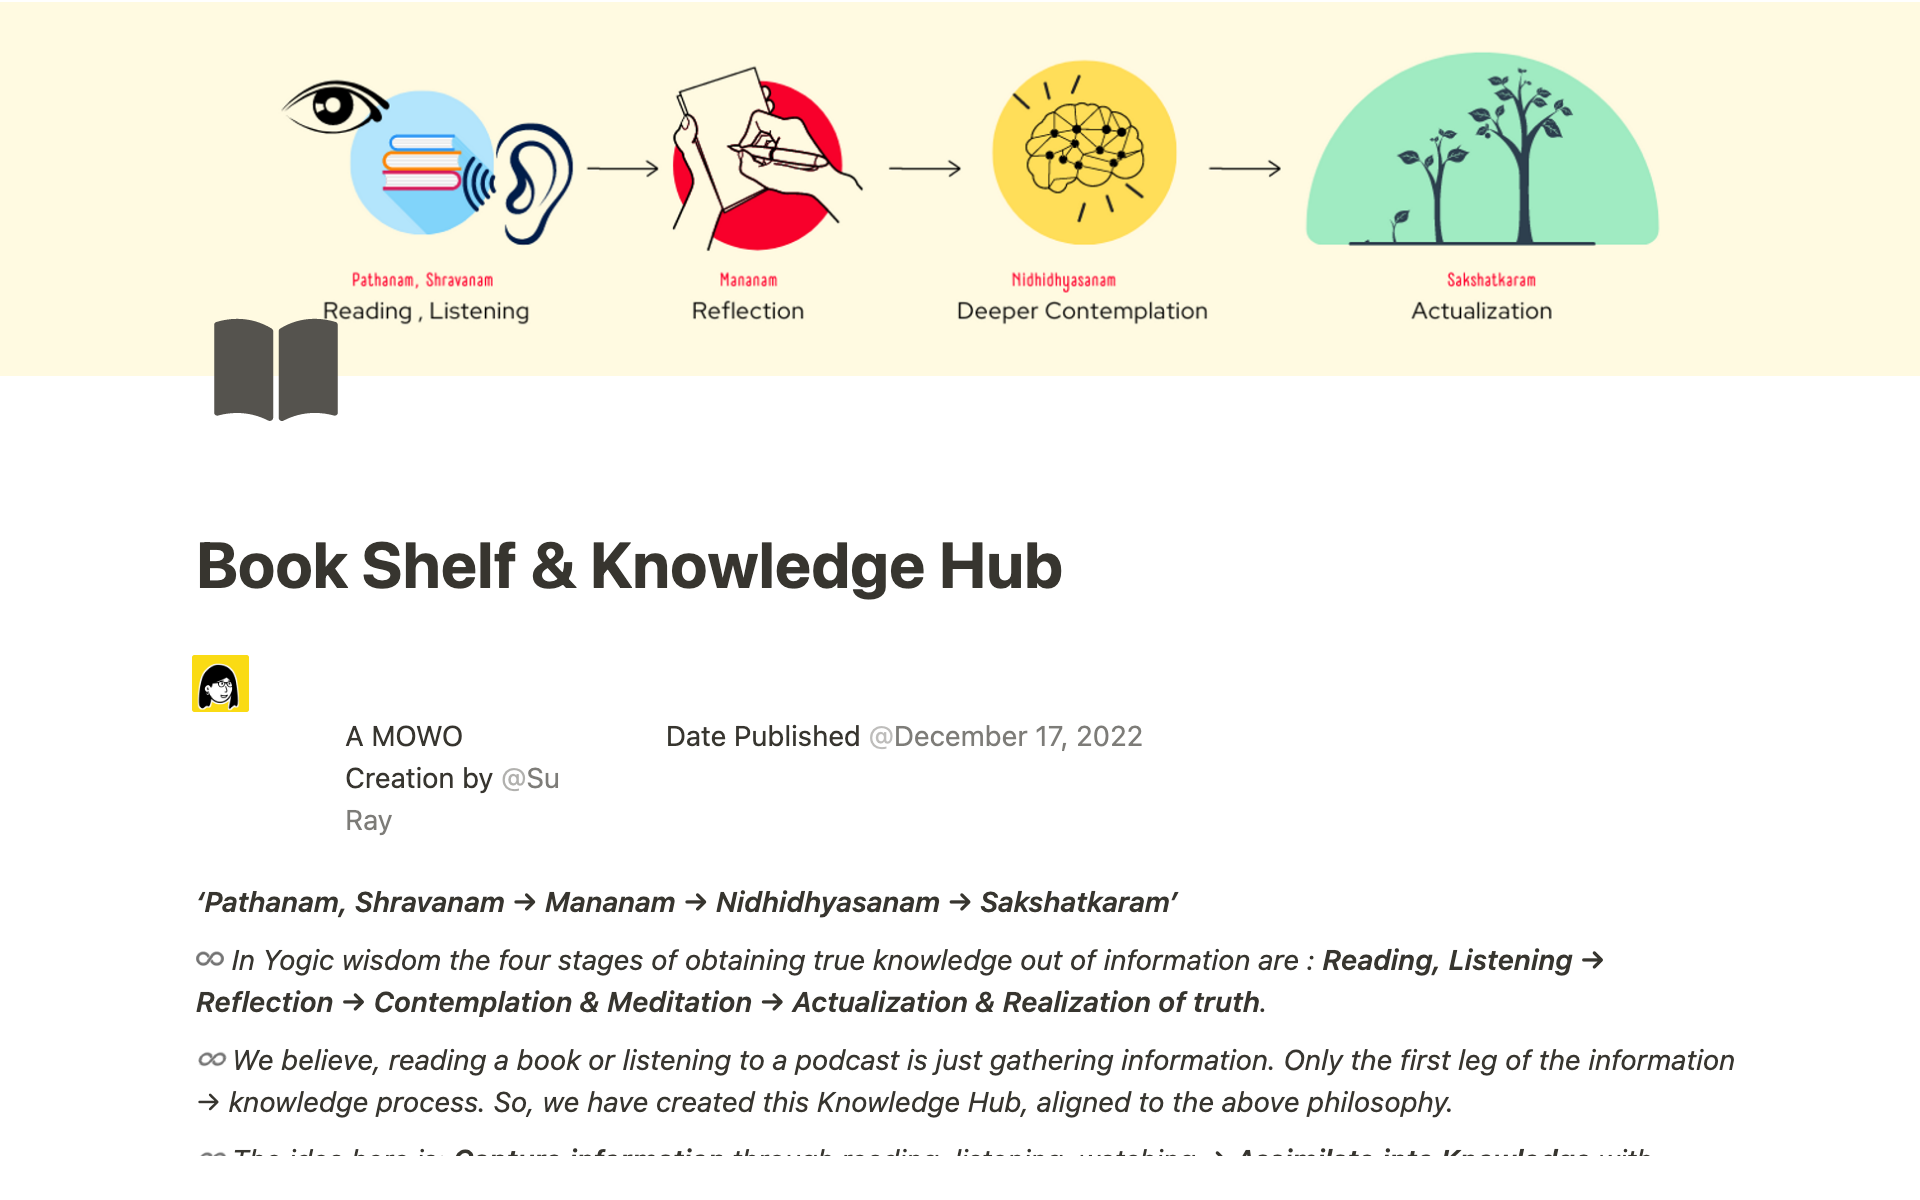 Aperçu du modèle de Book Shelf & Knowledge Hub